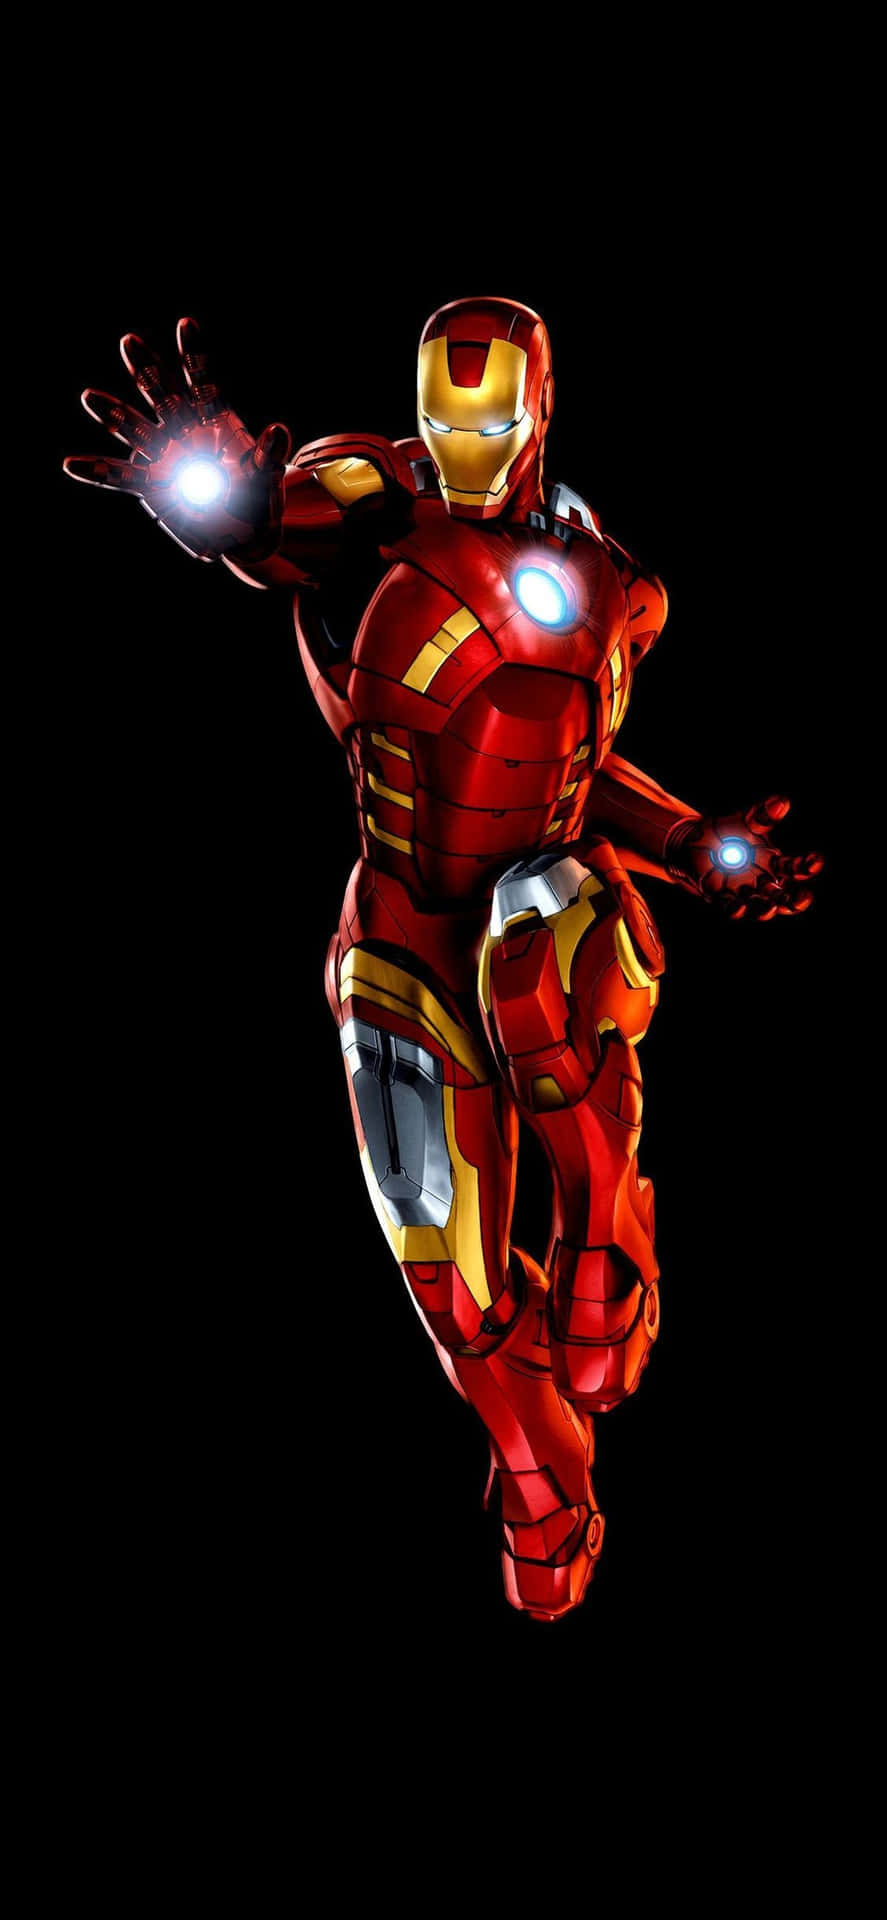 Iphonex Iron Man Bakgrund Pekande Med Sina Blasters.